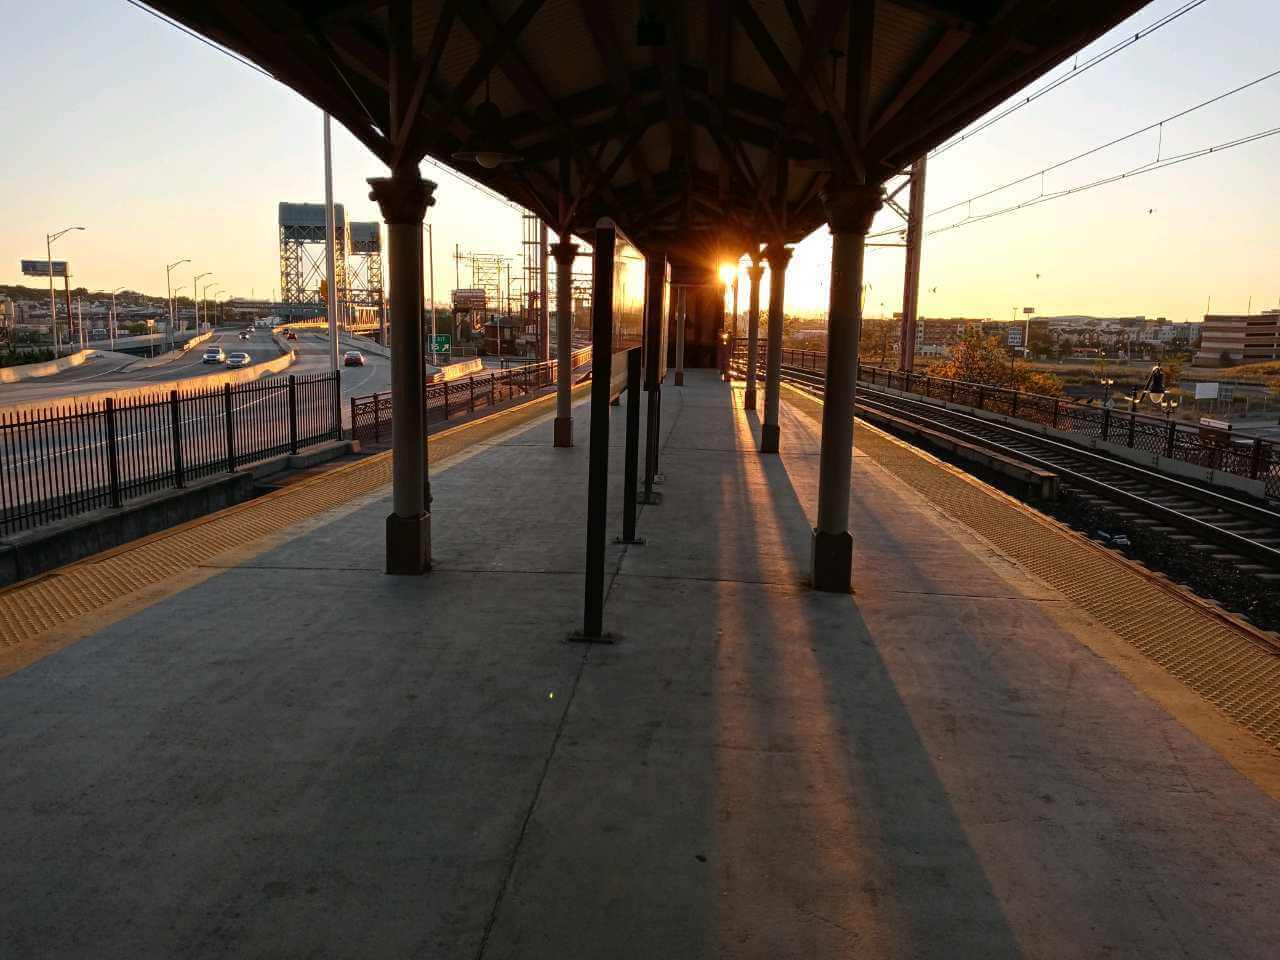 Train station platform in New Jersey